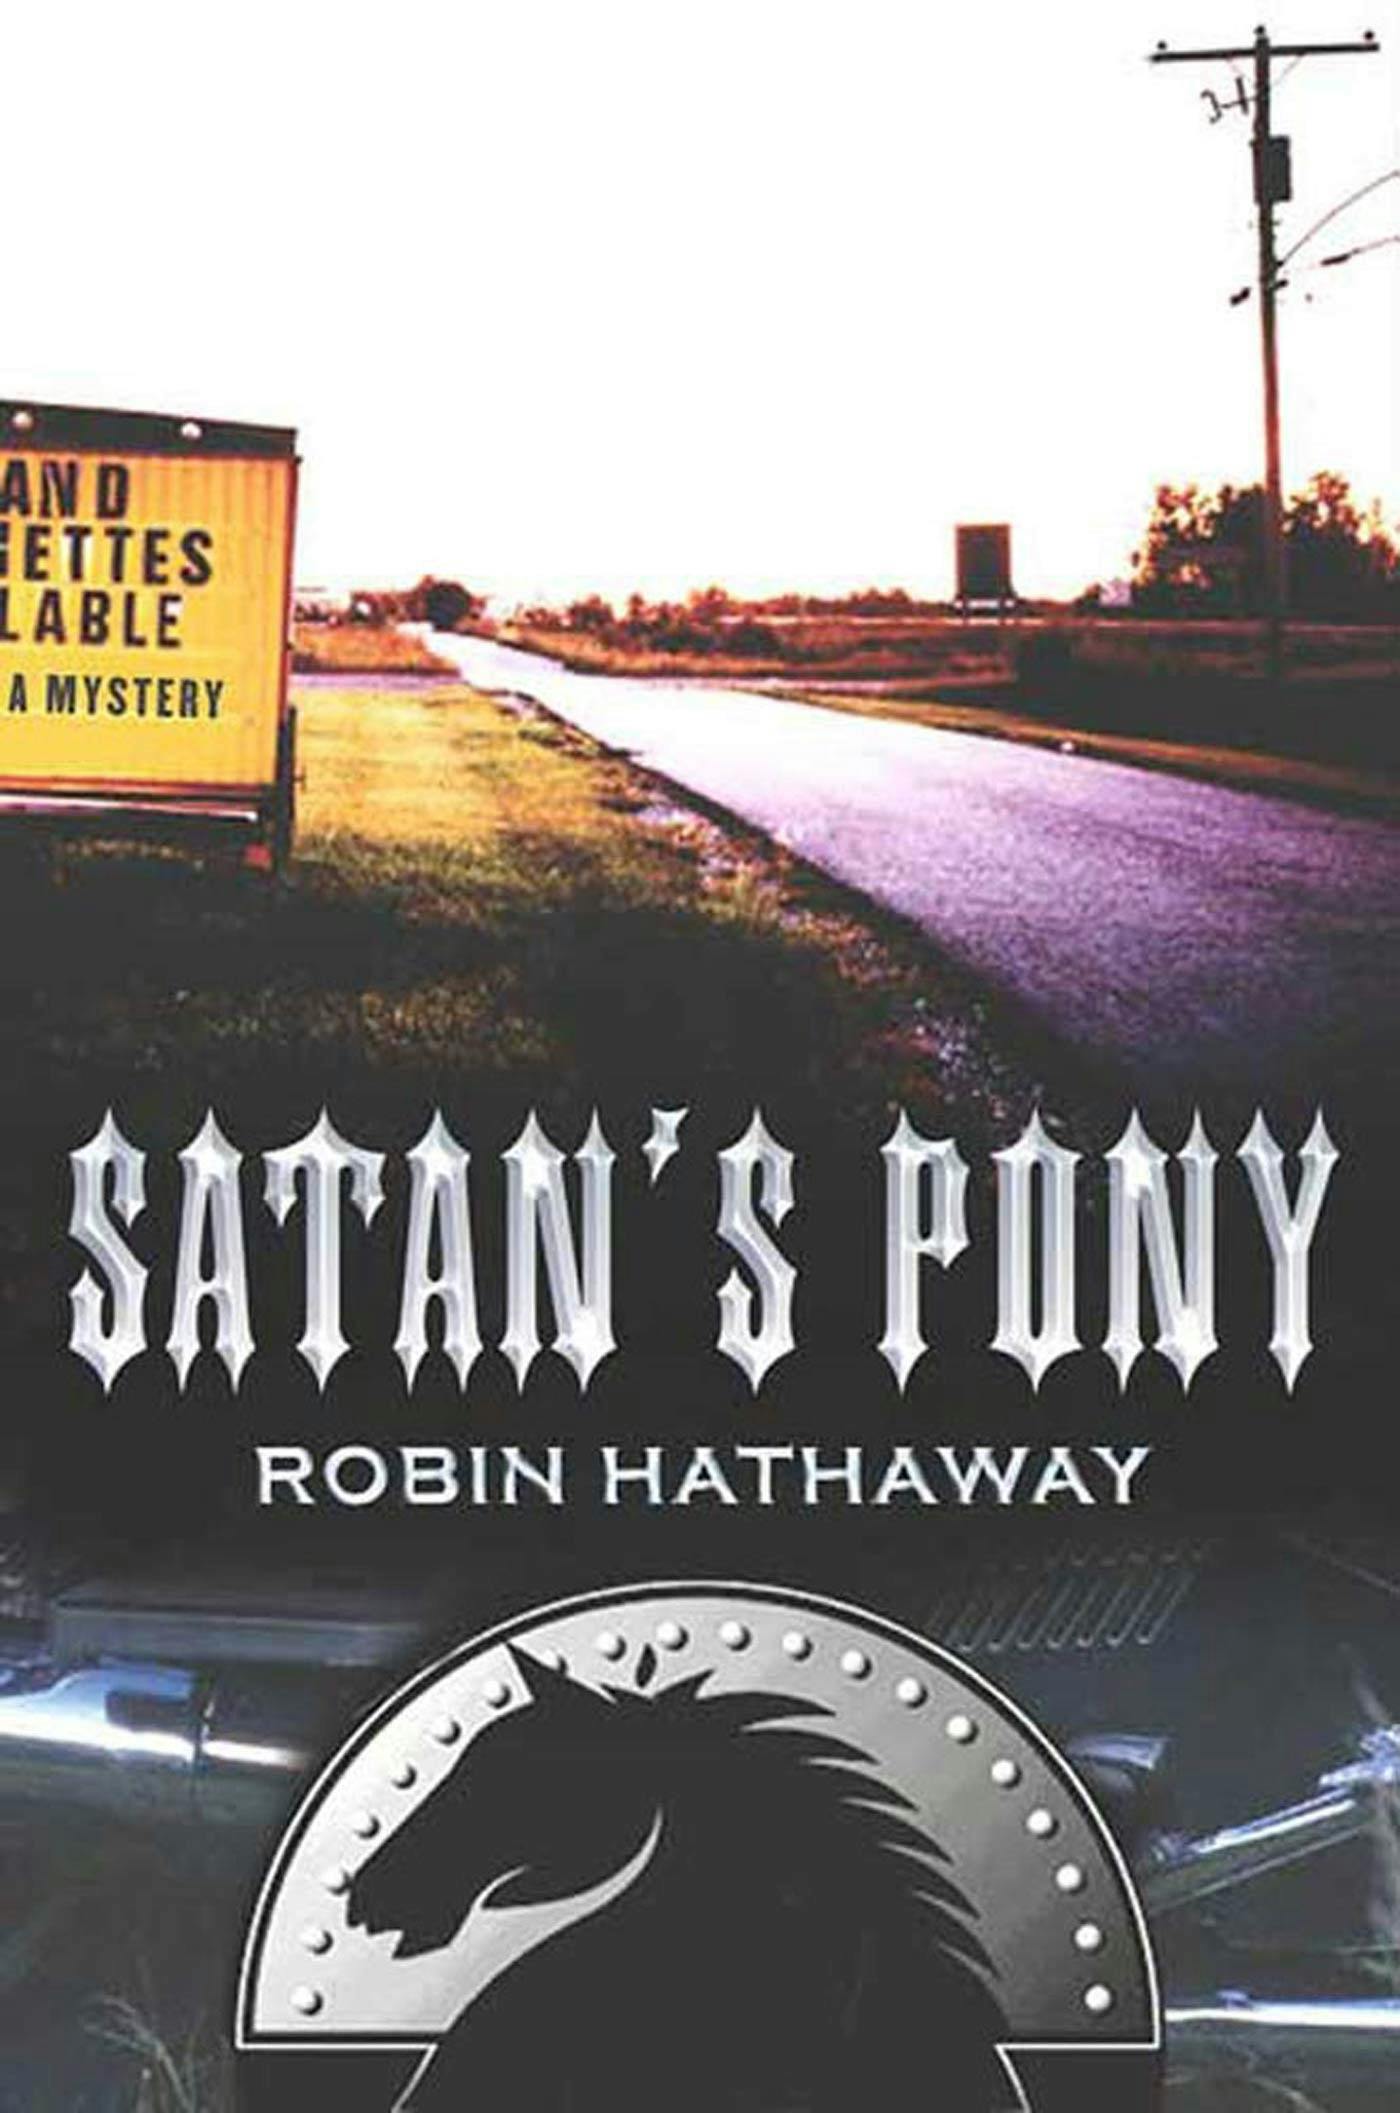 Satan's Pony